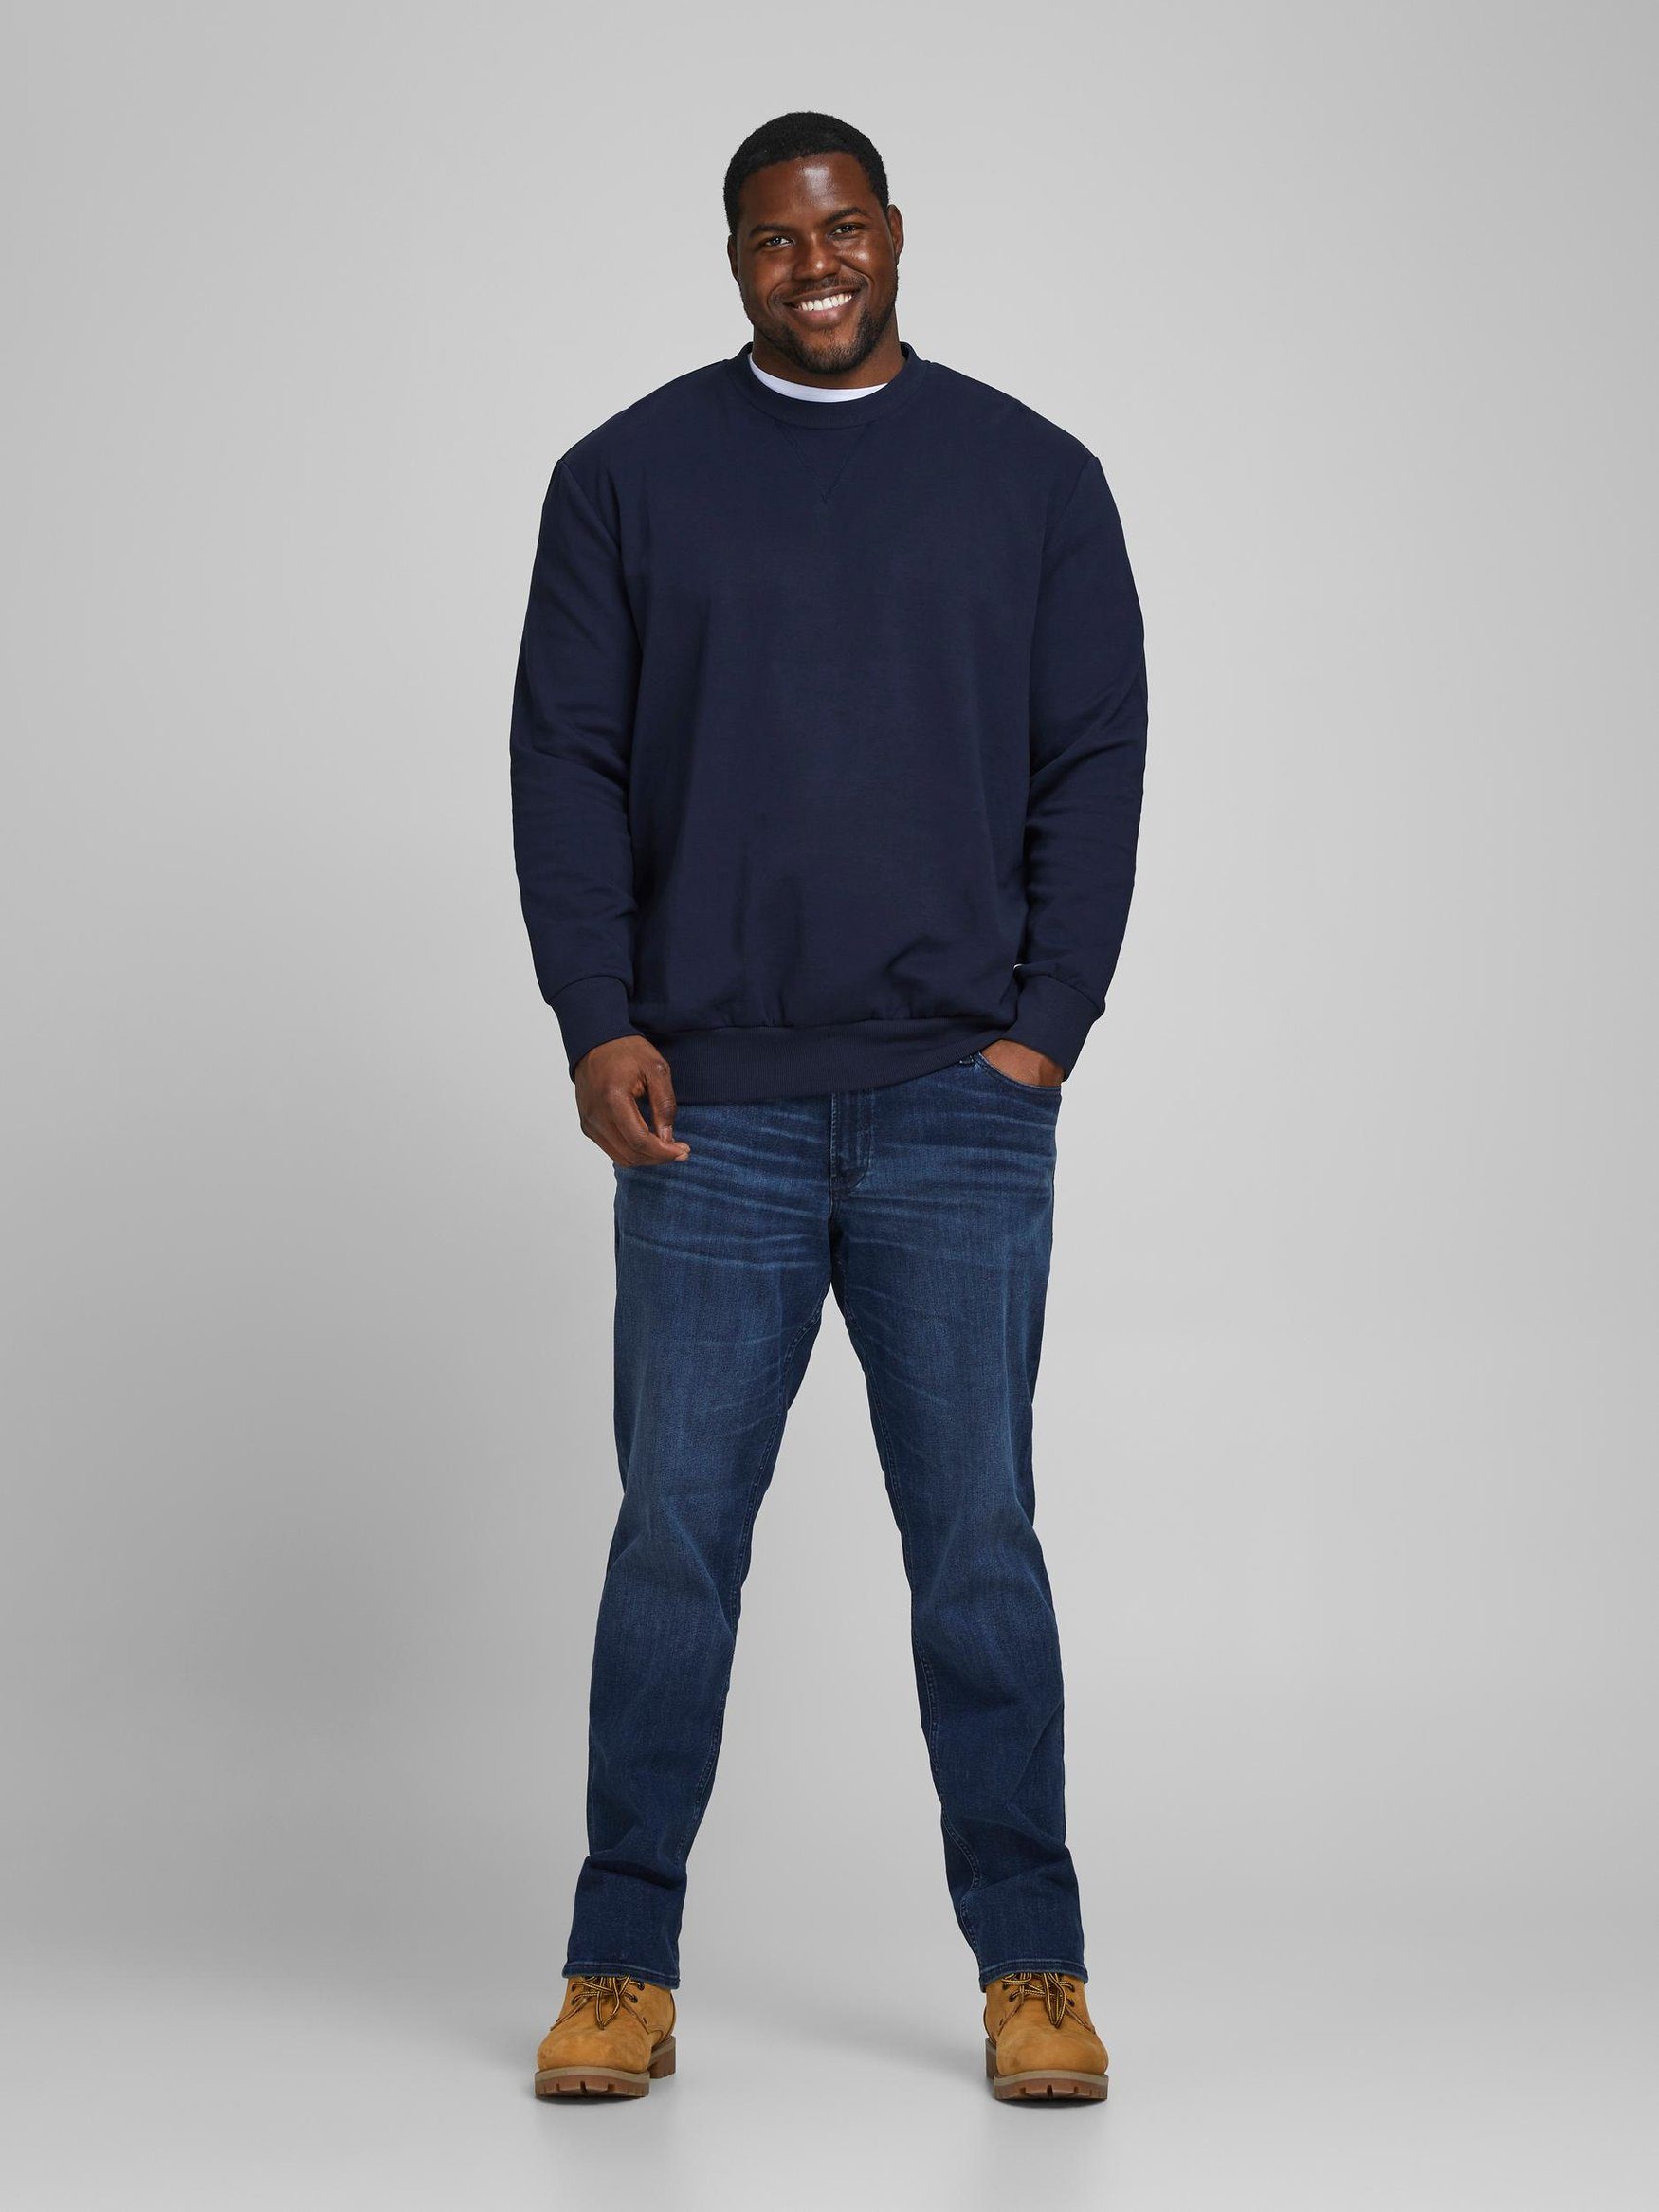 Jack Basic Navy Jones 4832 Pullover Sweatshirt Size in & Sweatshirt JJEBASIC Übergröße Plus Sweater